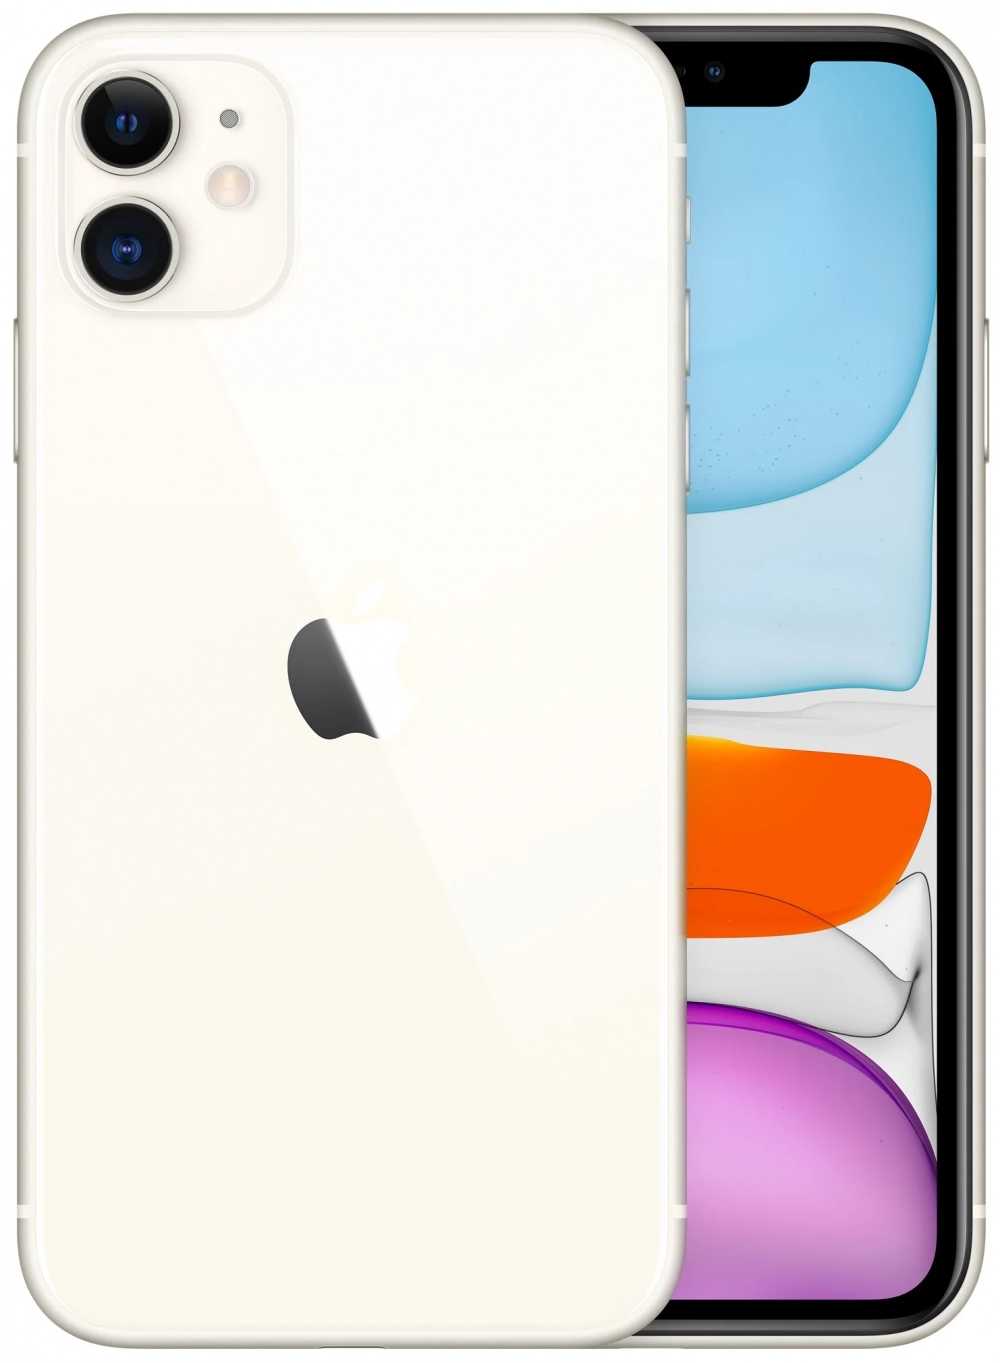 Смартфон iPhone 11 128Gb white